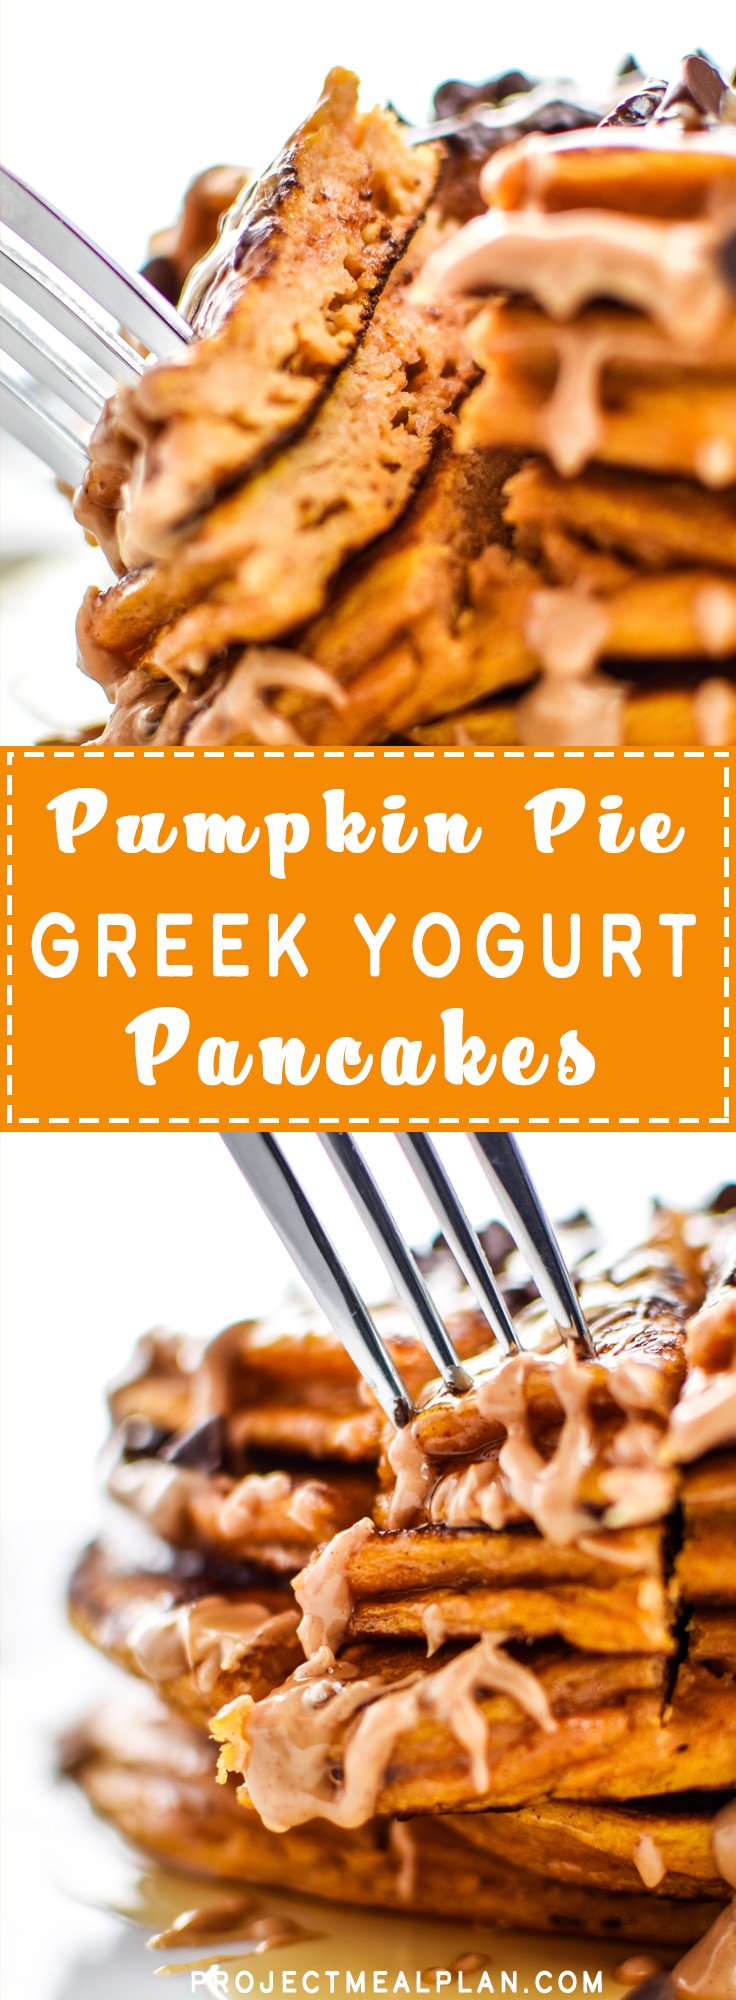 Pumpkin Pie Greek Yogurt Pancakes - Moist and delicious fall breakfast treat! Make-ahead and fridge friendly! - ProjectMealPlan.com